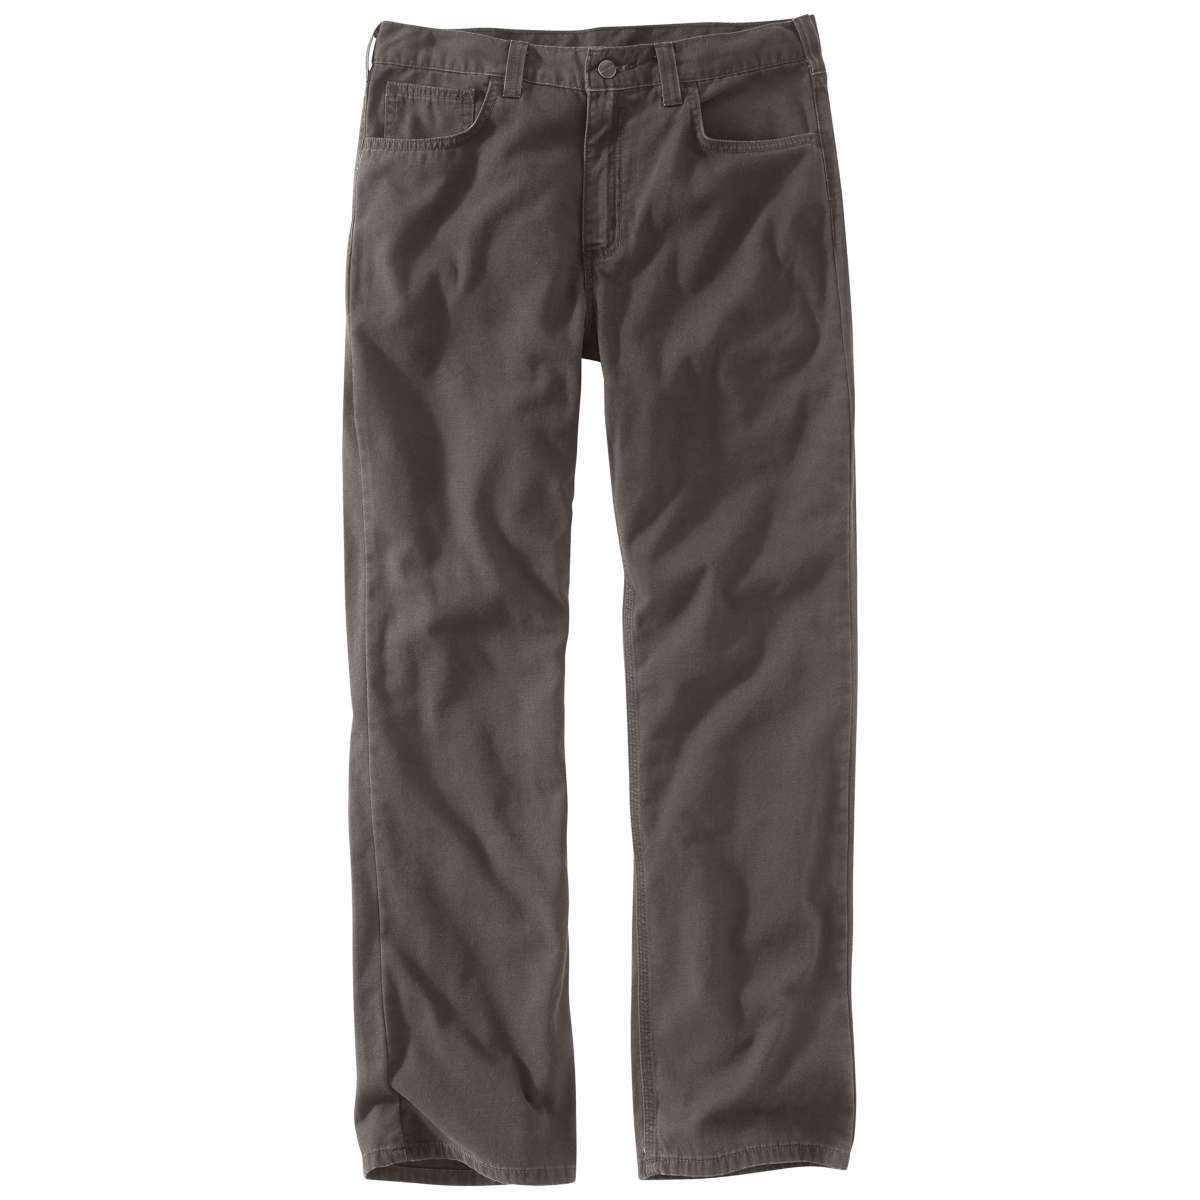 Carhartt Men's Rugged Flex Rigby 5-Pocket Work Pants - Black, 38/34